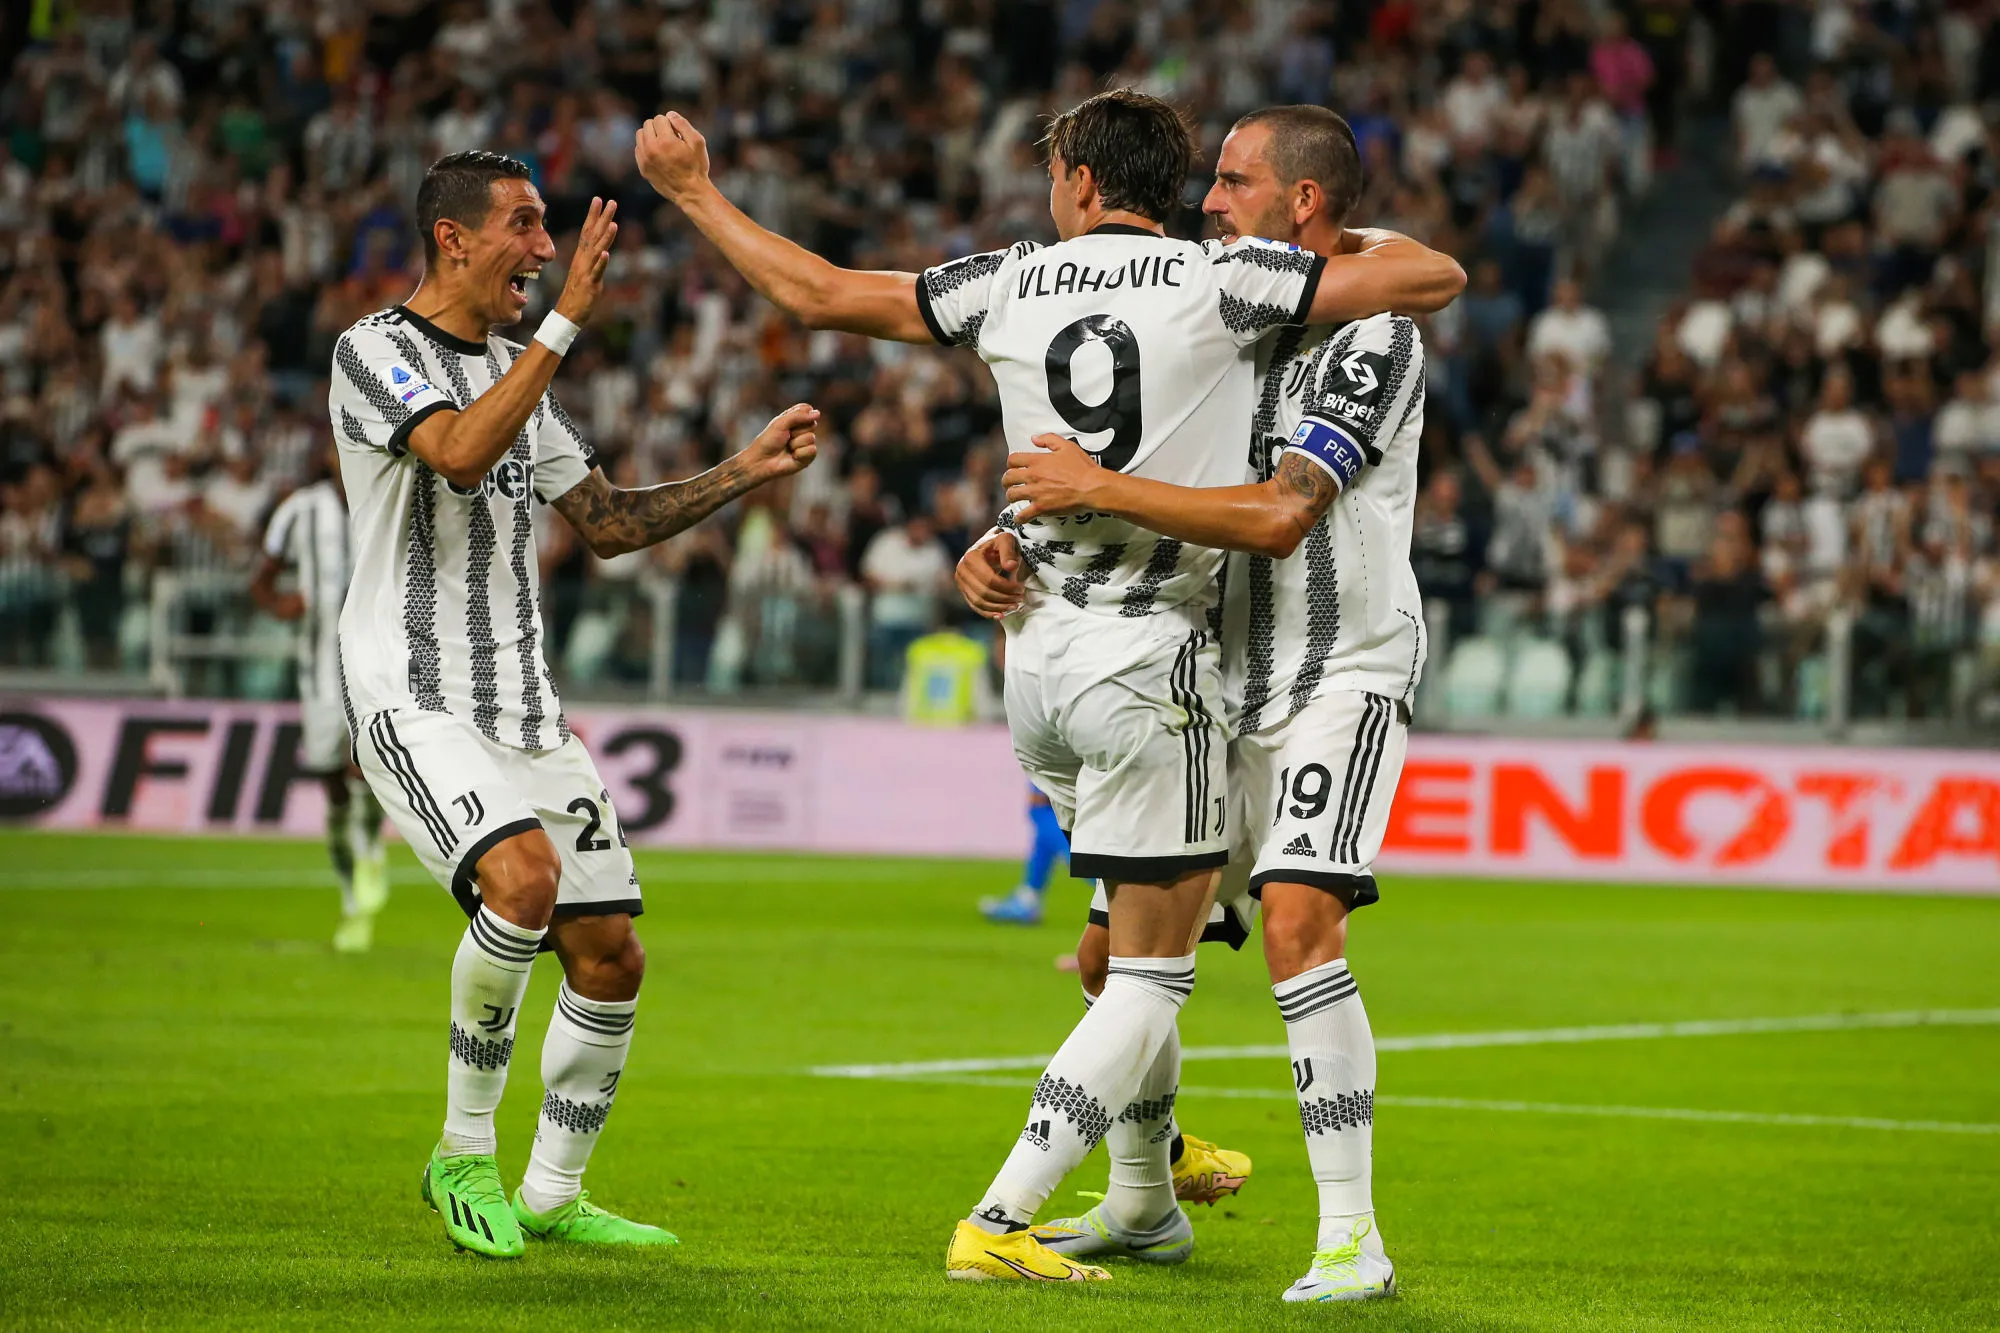 Pronostic Juventus Atalanta Bergame : Analyse, cotes et prono du match de Serie A